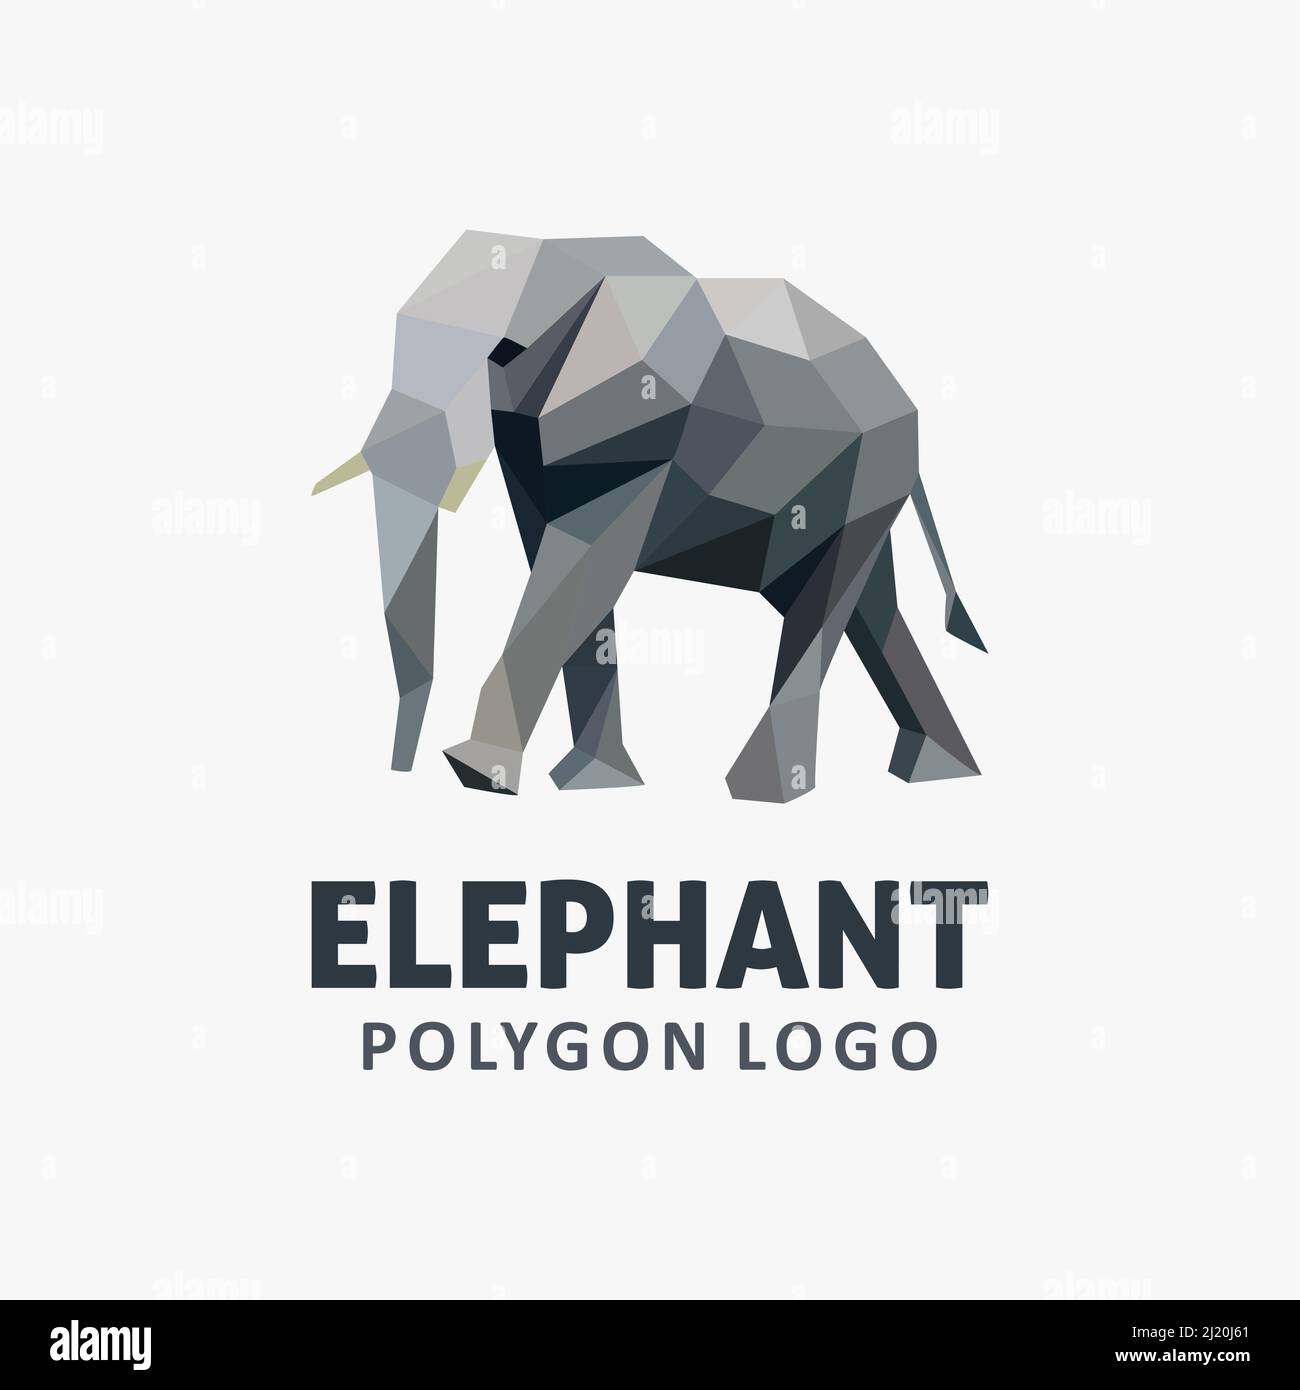 Elephant low poly logo design Stock Vector